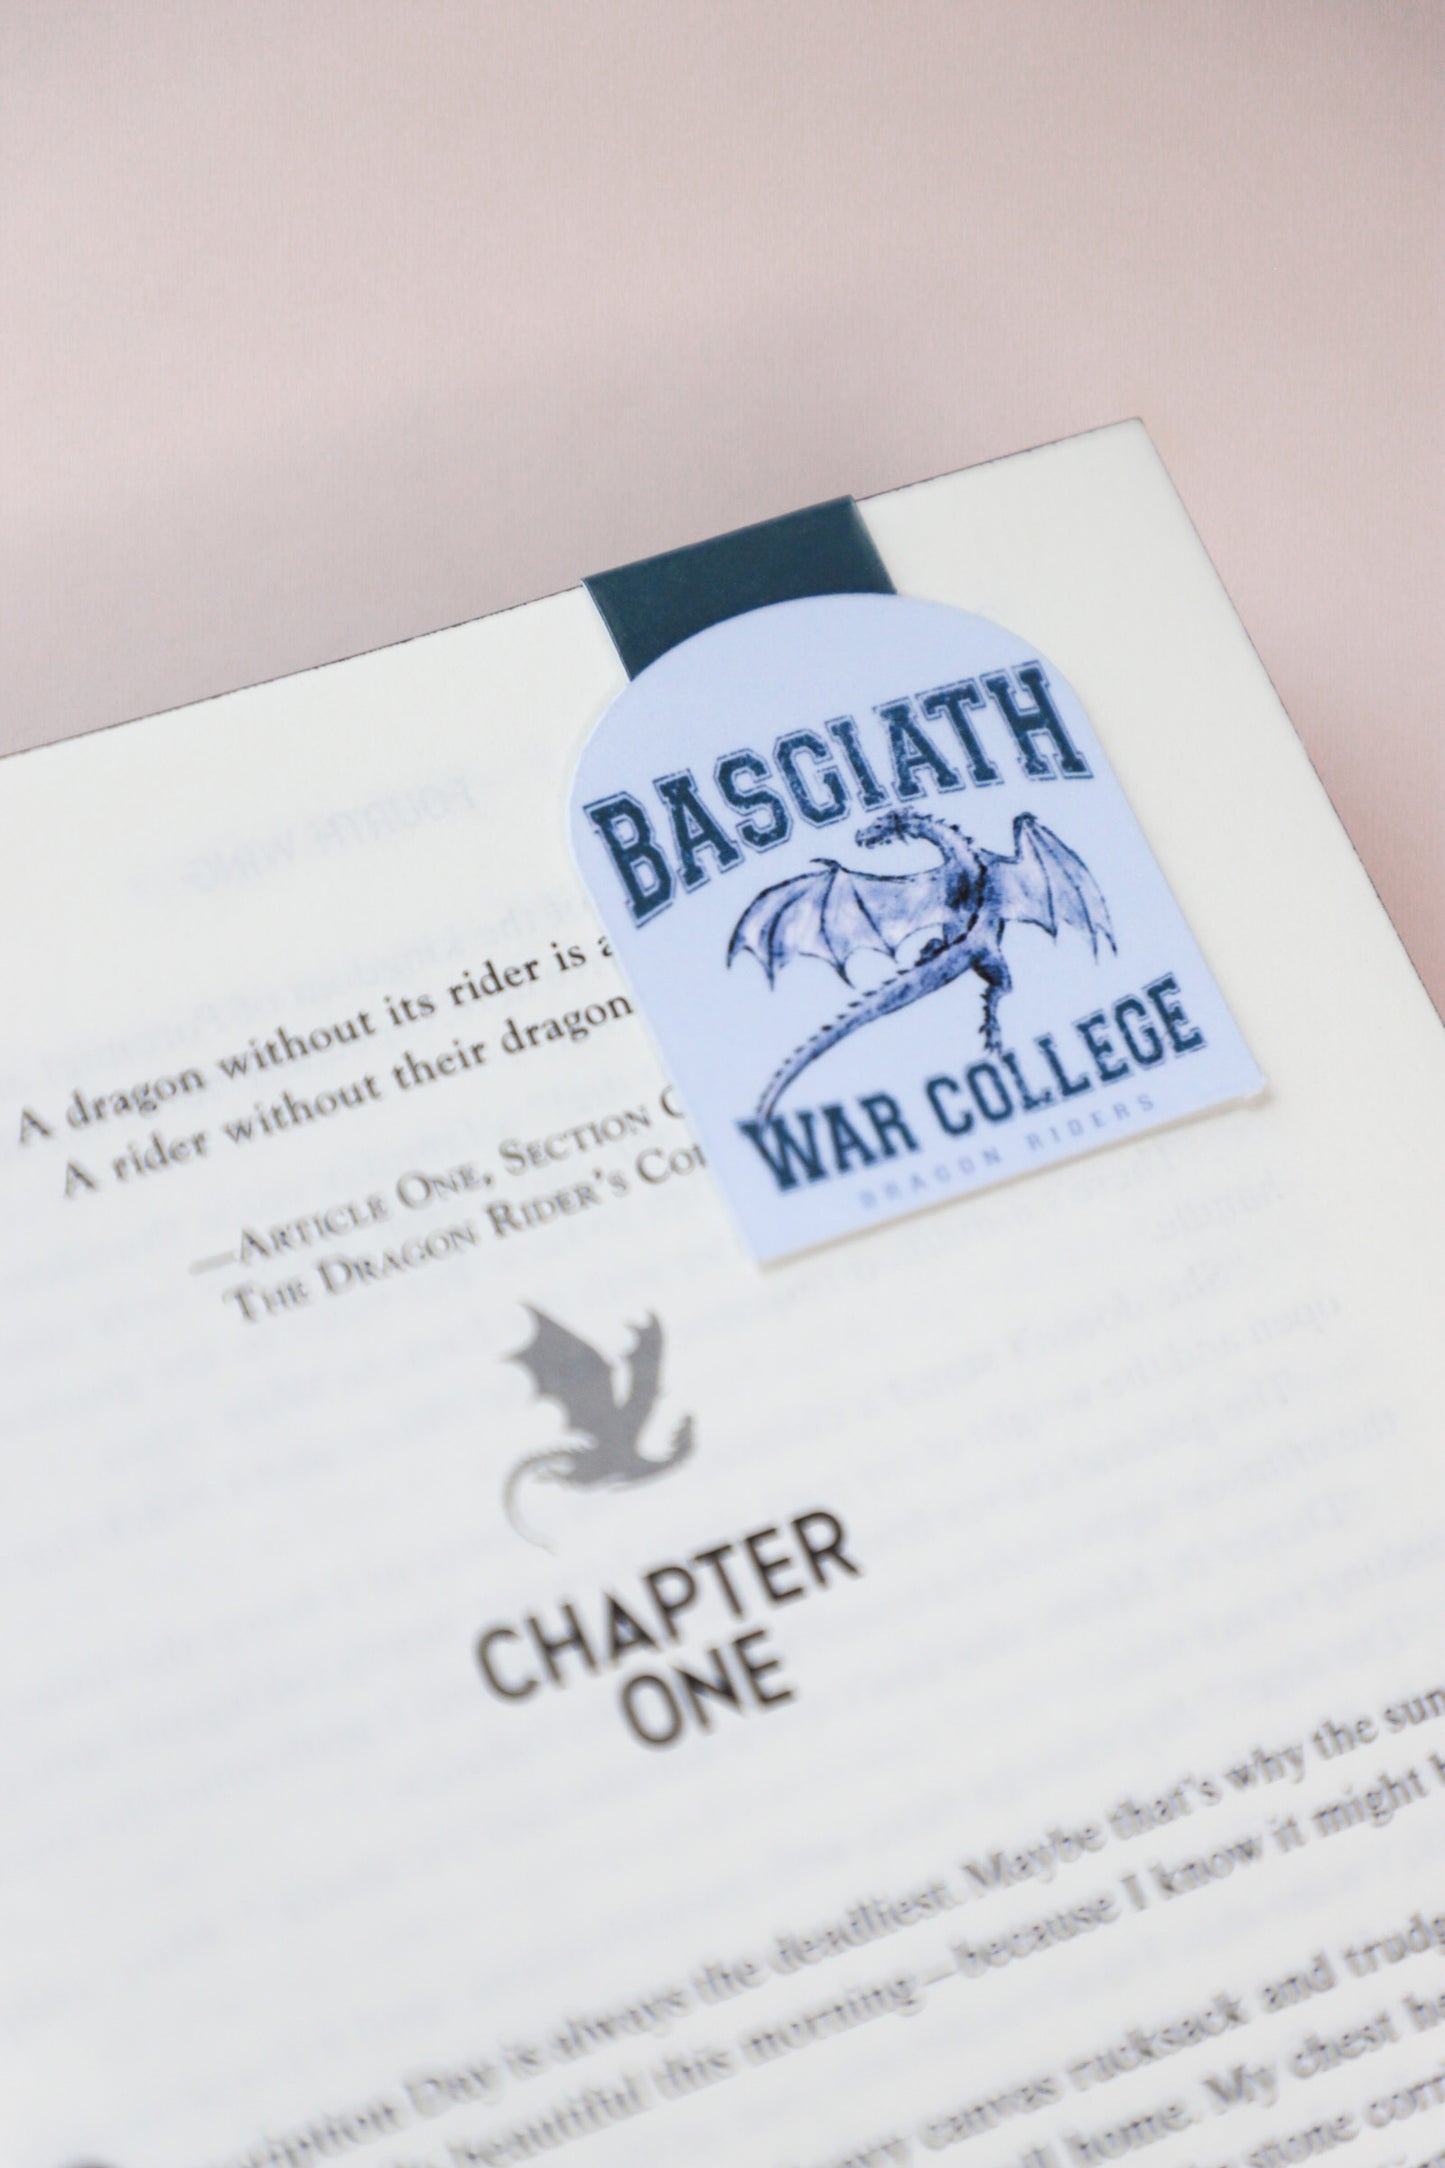 Basgiath War College Magnetic Bookmark